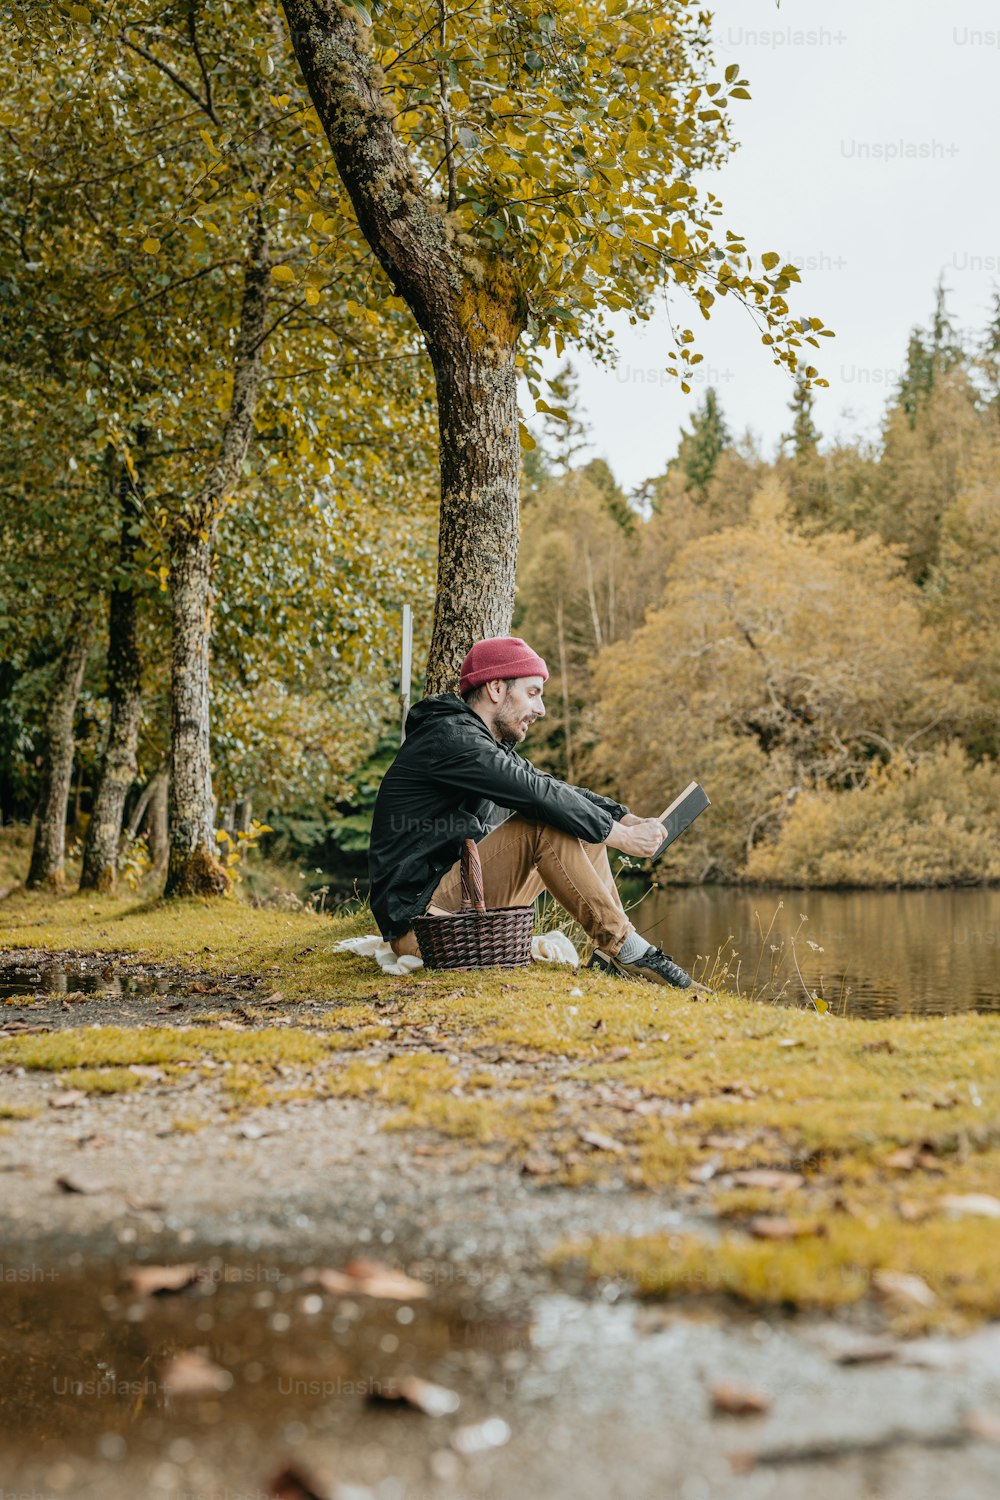 a man sitting on a bench next to a lake